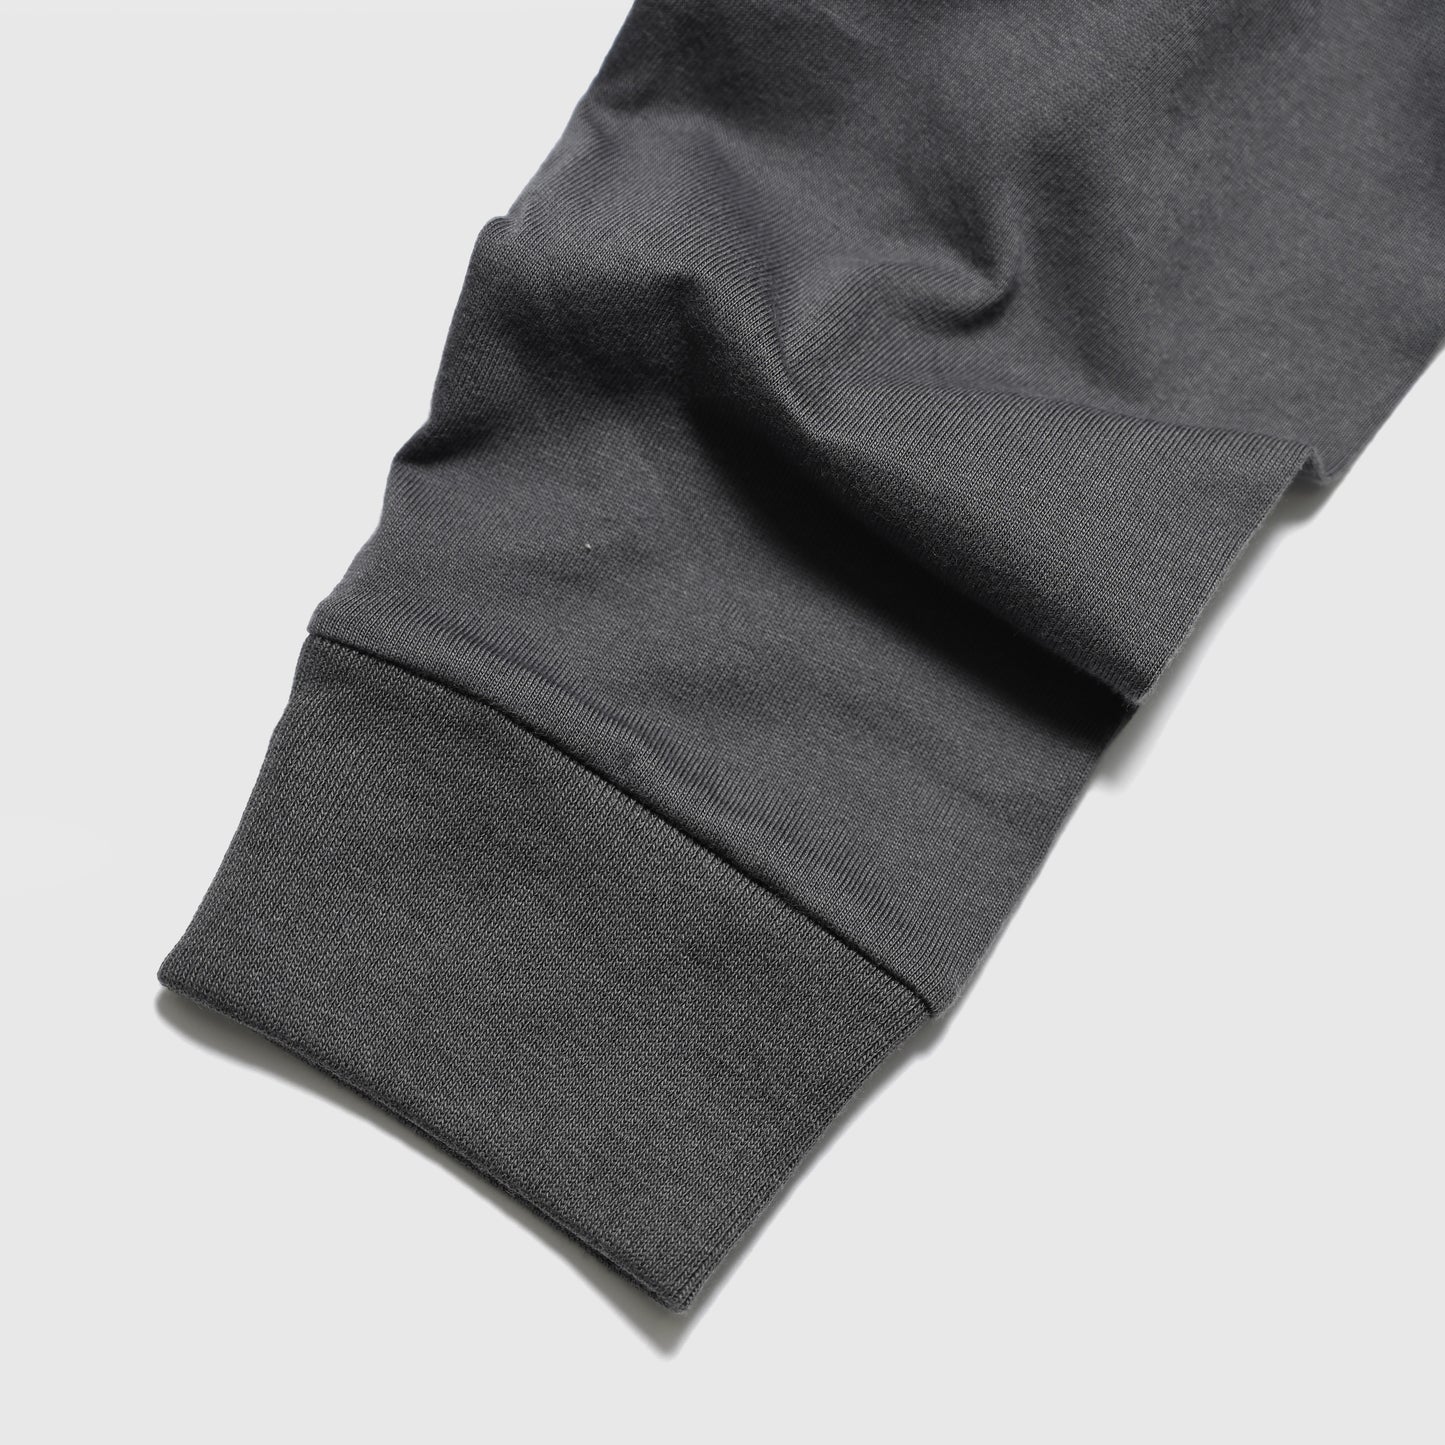 FRSTB 313 Carbon Neutral Garment Long Sleeve Top